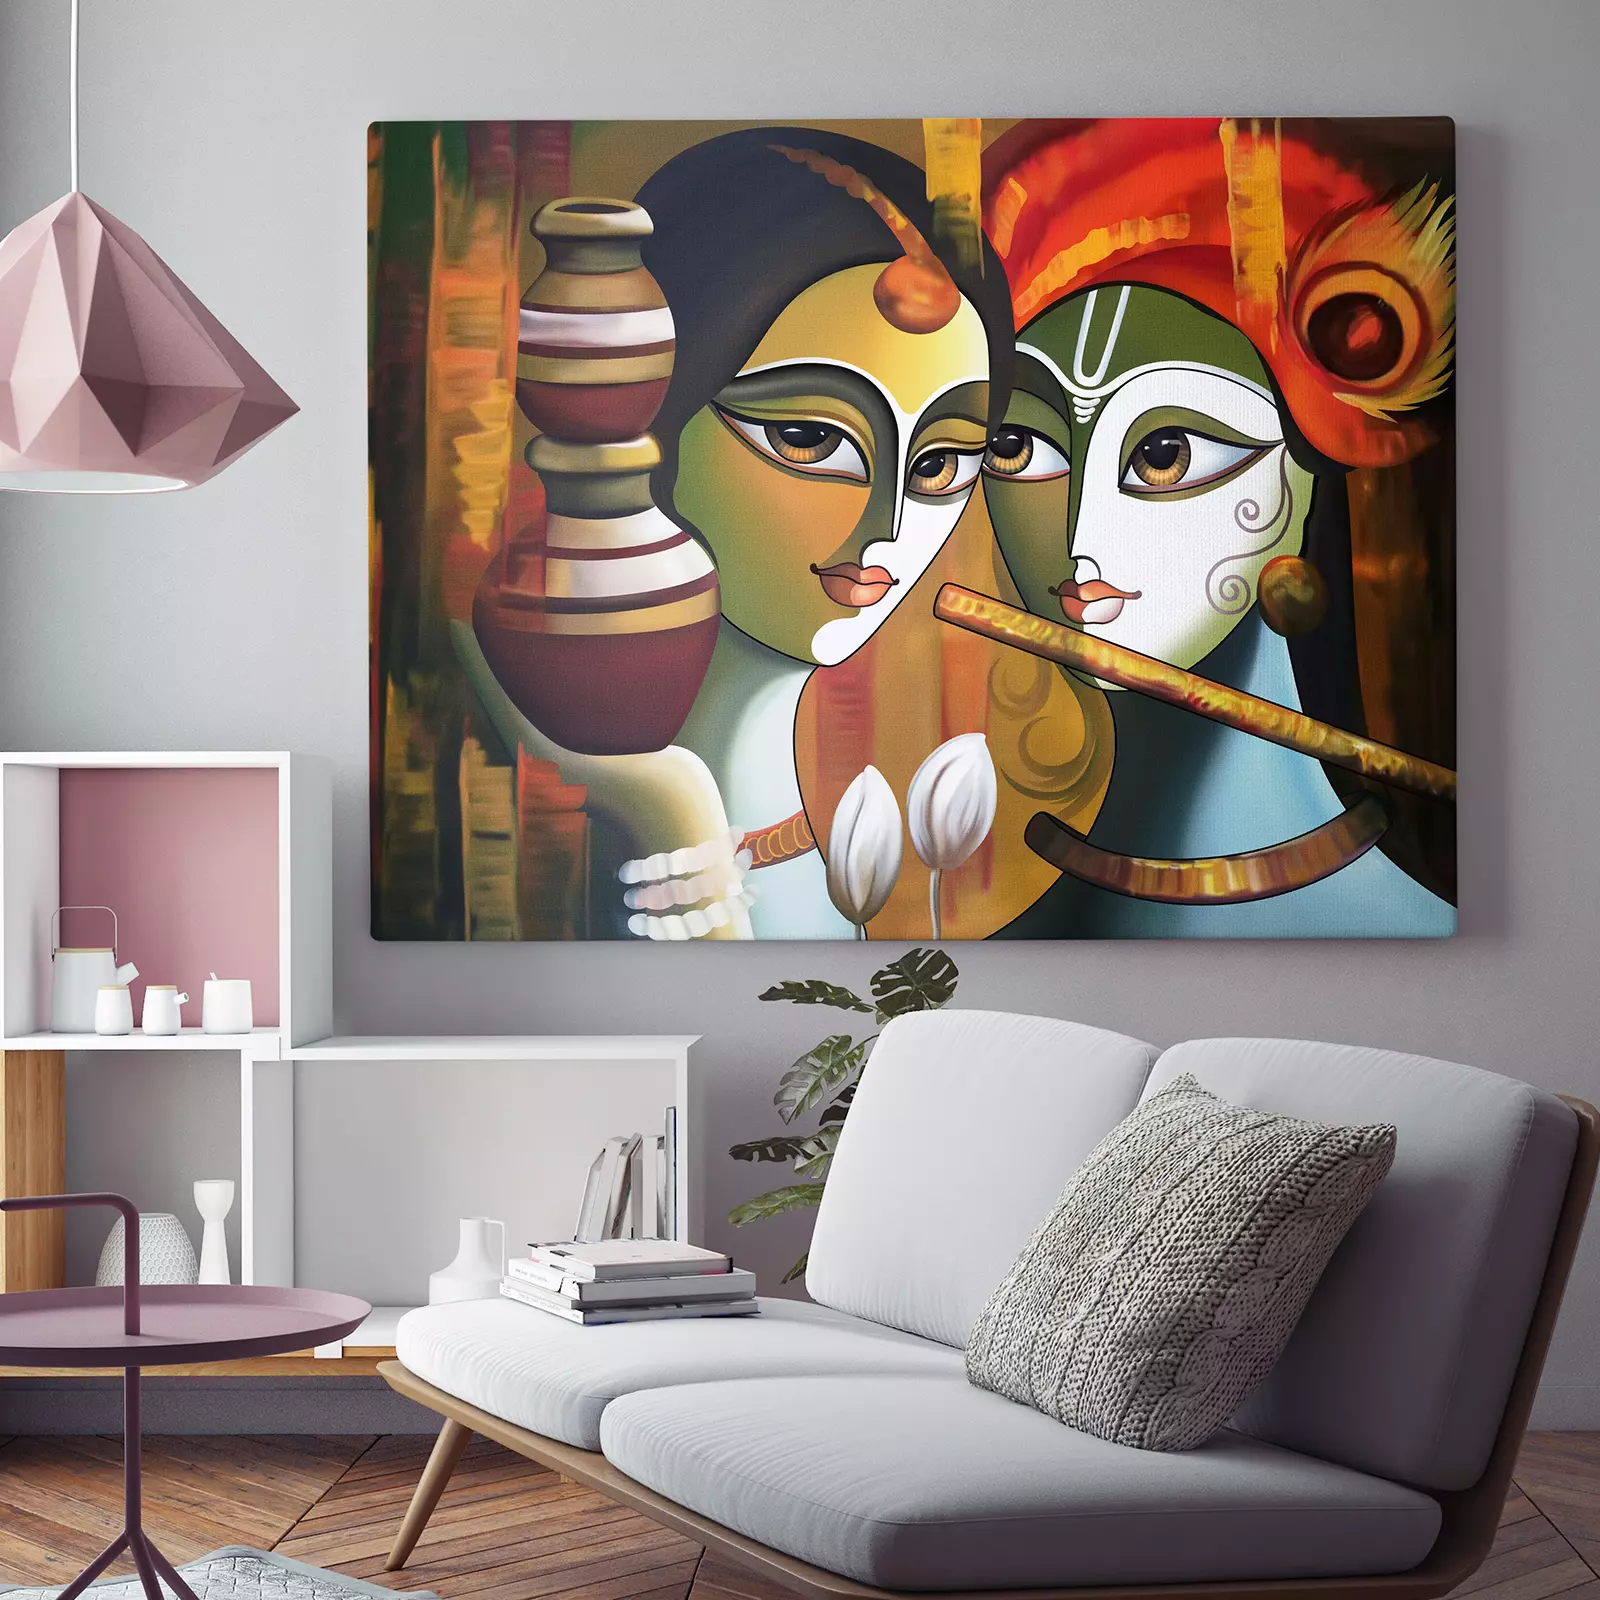 Radha krishna Digital Painting - Merawalaprint